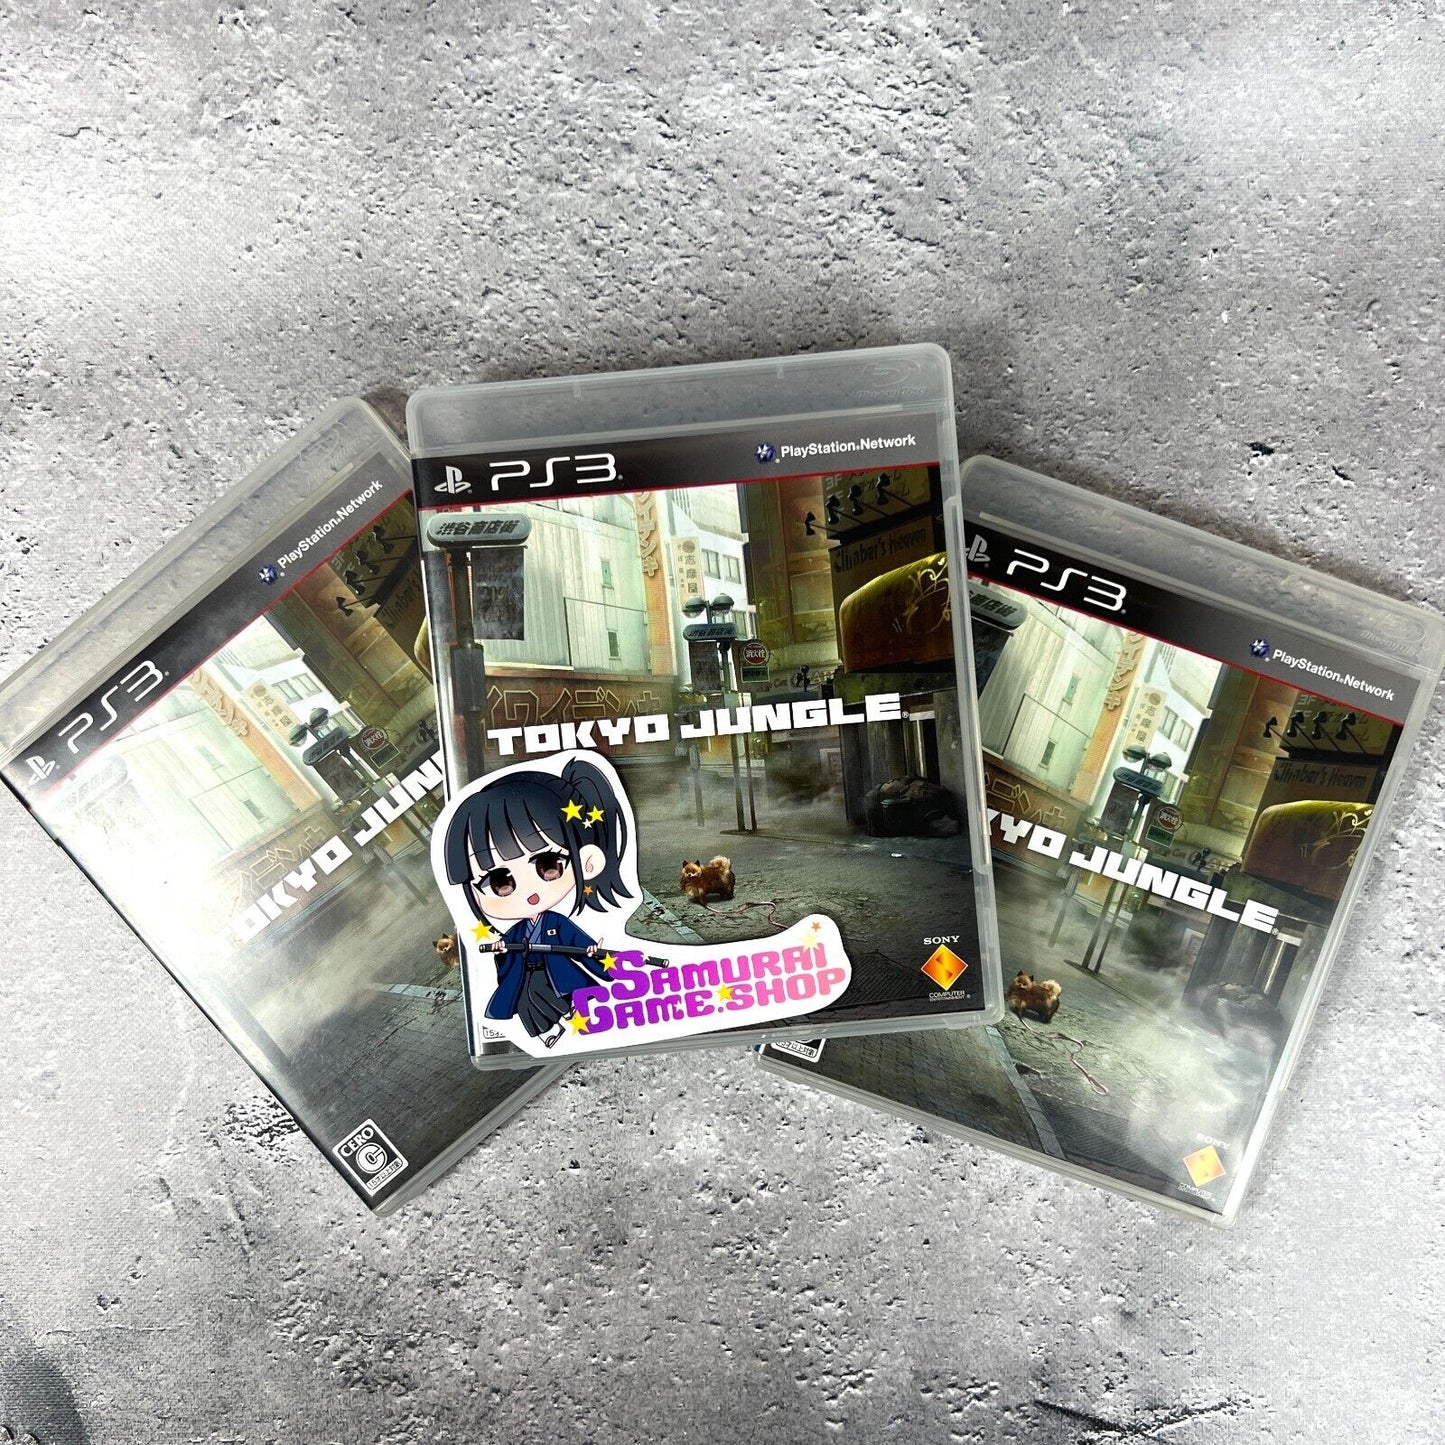 Tokyo Jungle 3 Set PS3 PlayStation Network Japanese Language Edition Sony Rare